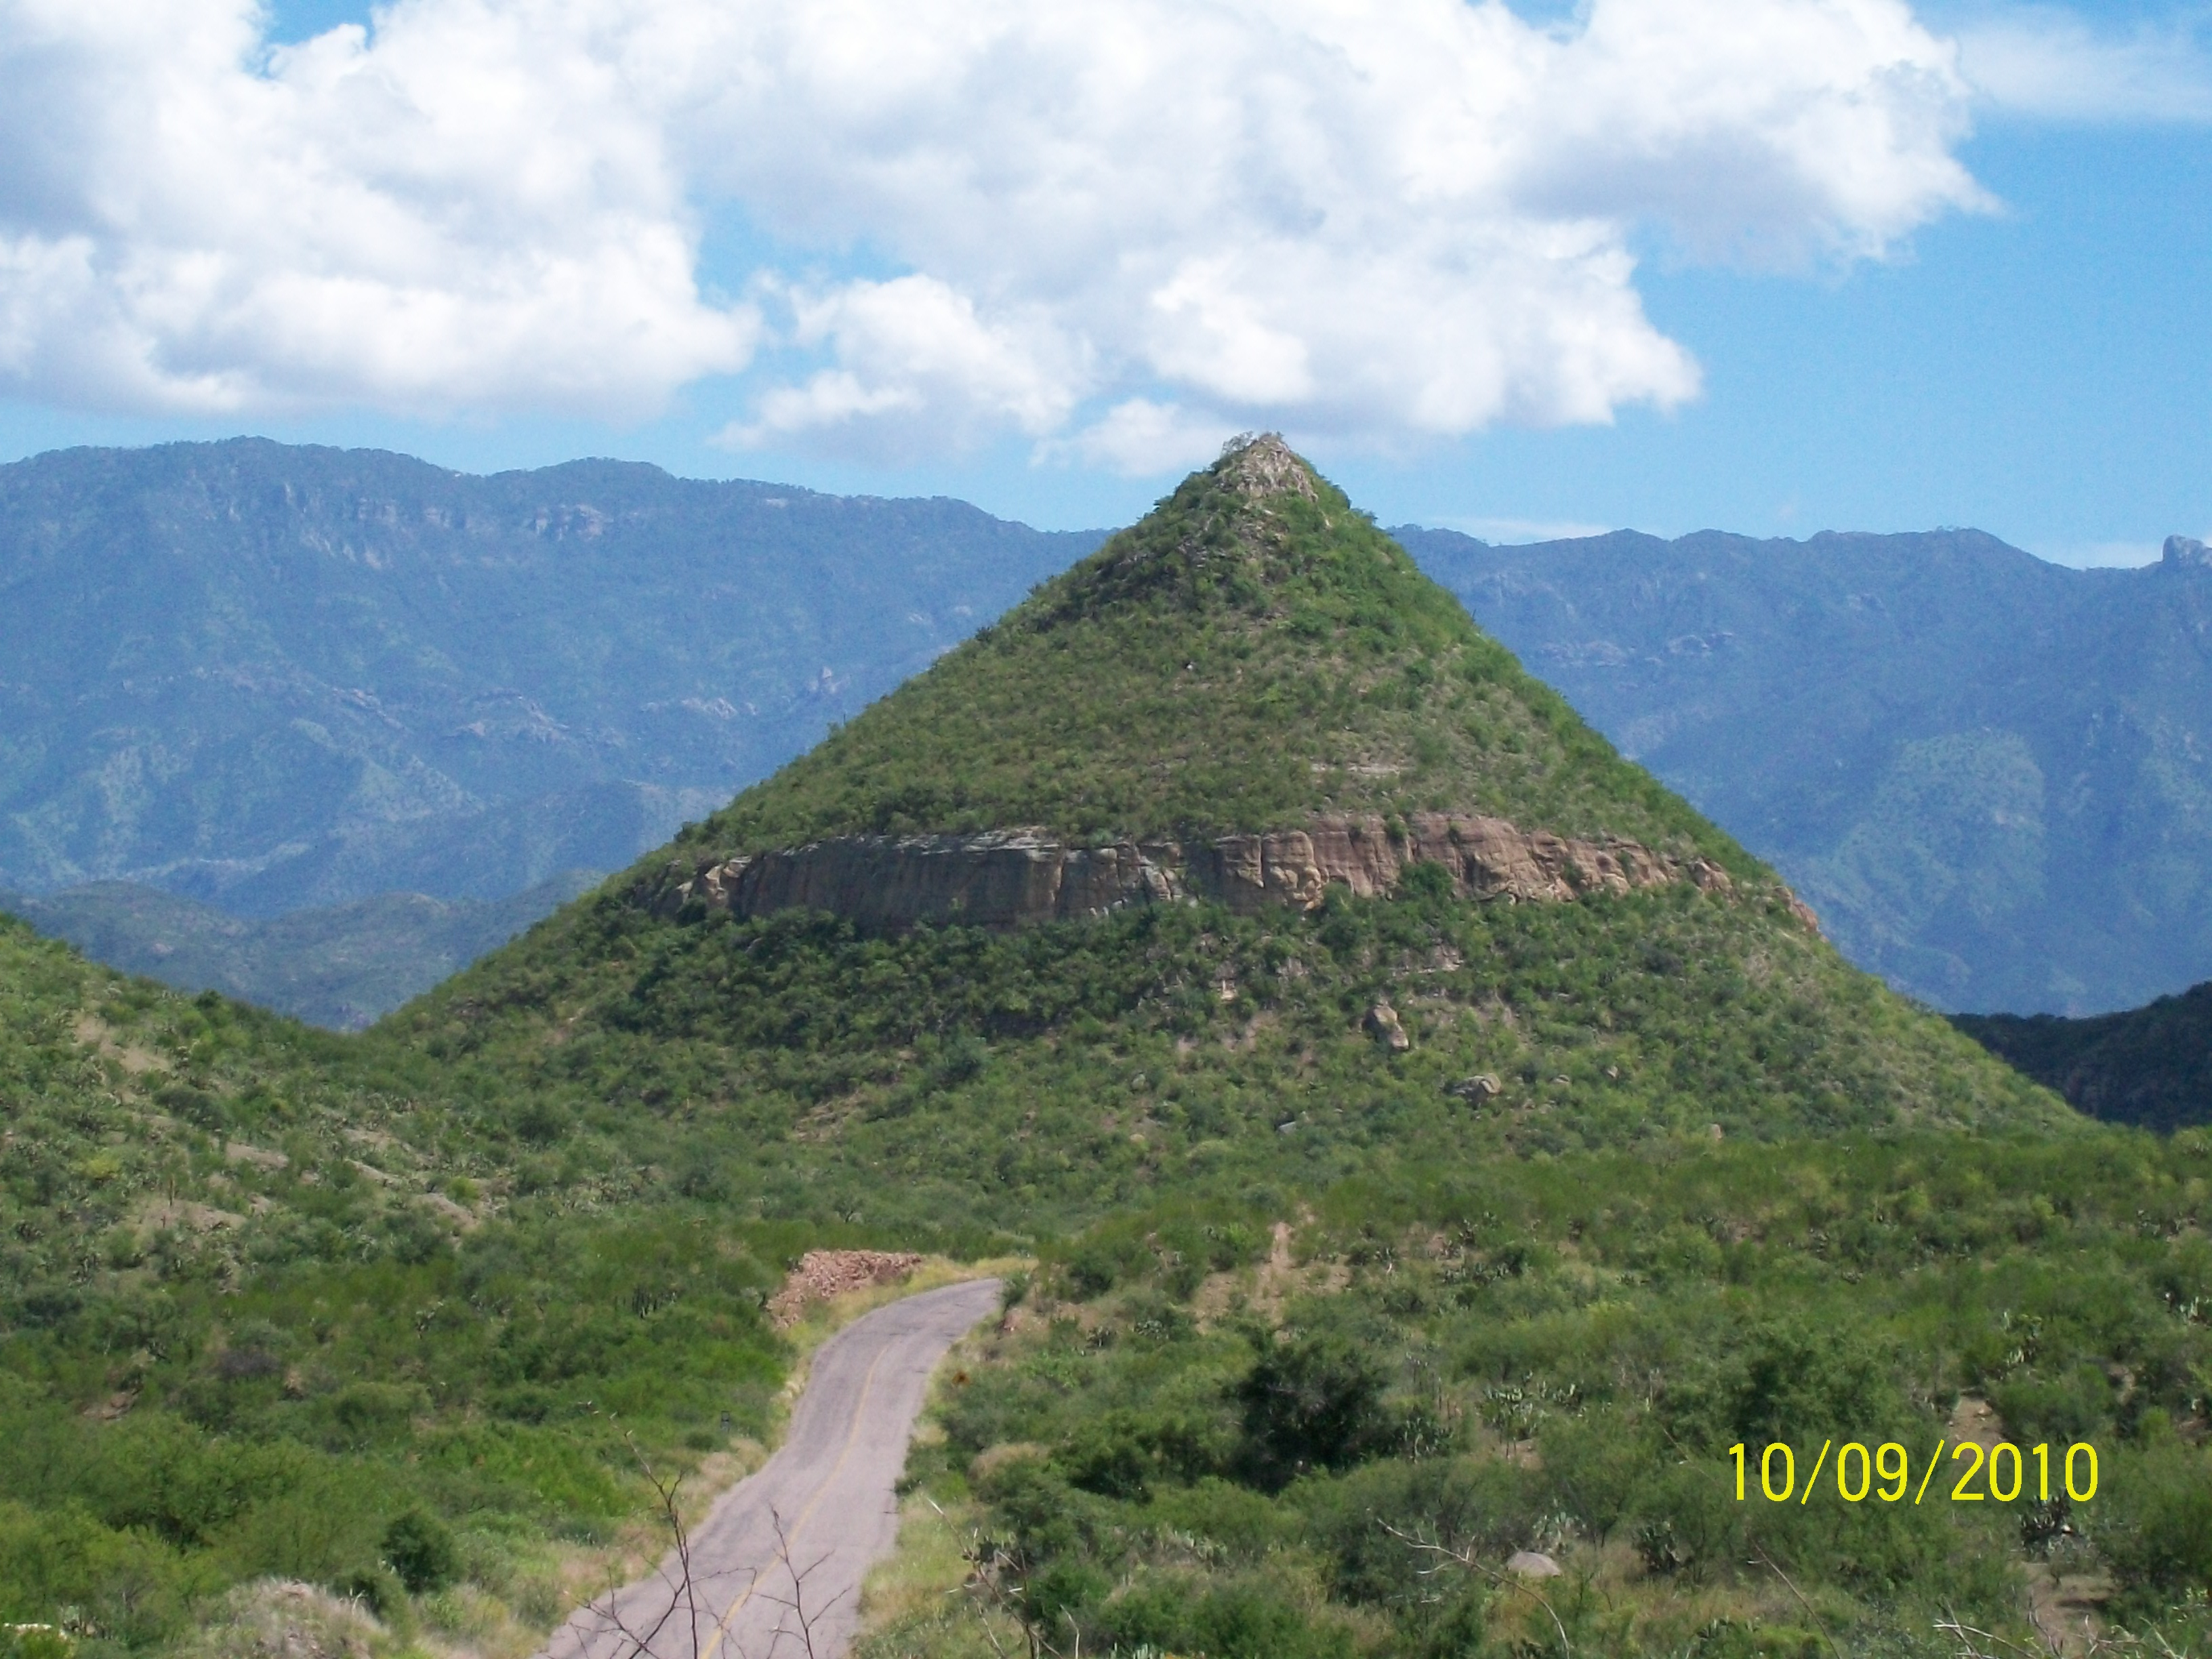 File:La Pirinola - panoramio.jpg - Wikimedia Commons